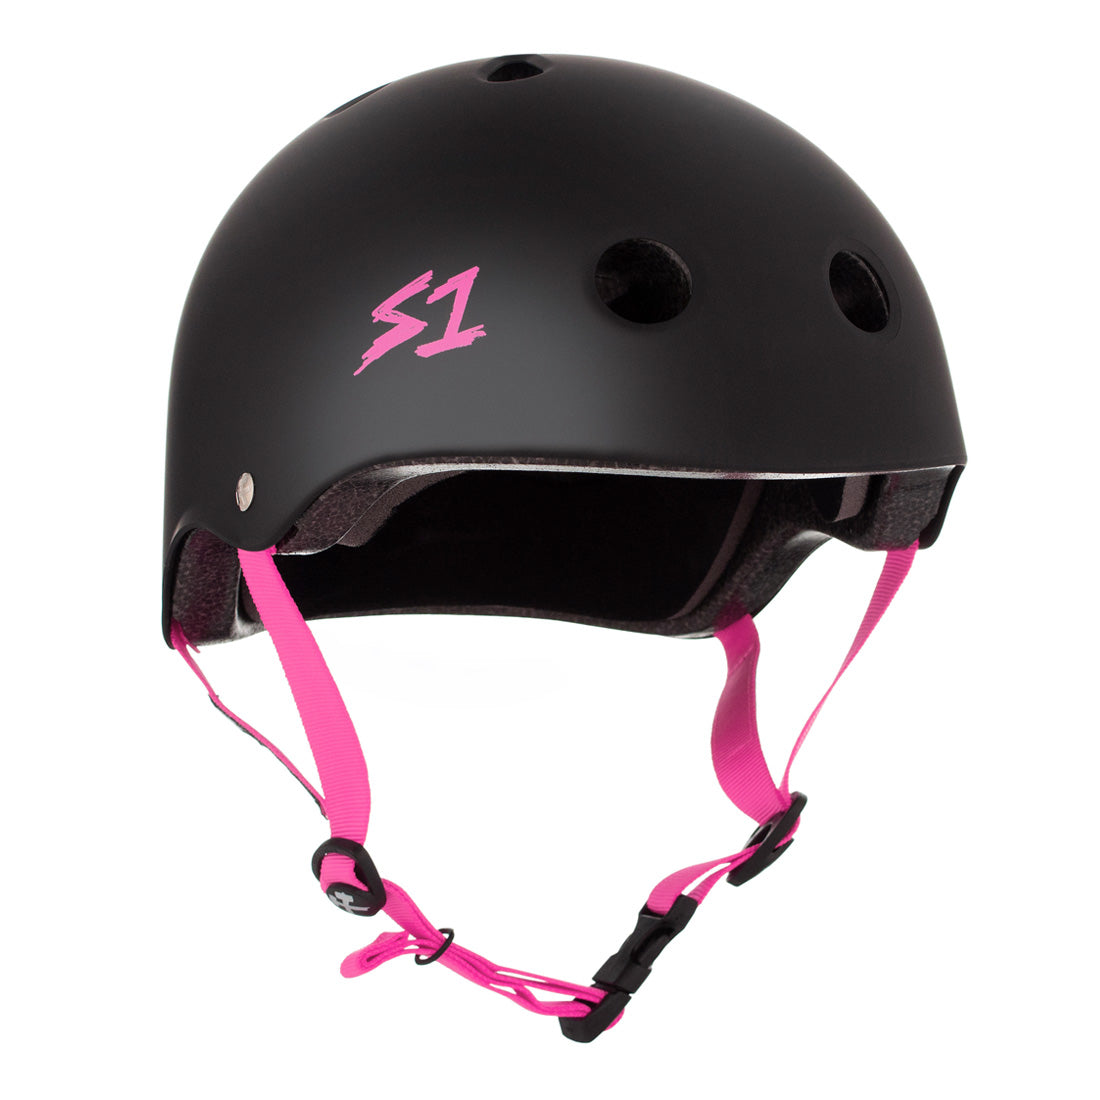 S-One Lifer Helmet - Black/Pink Matte Helmets